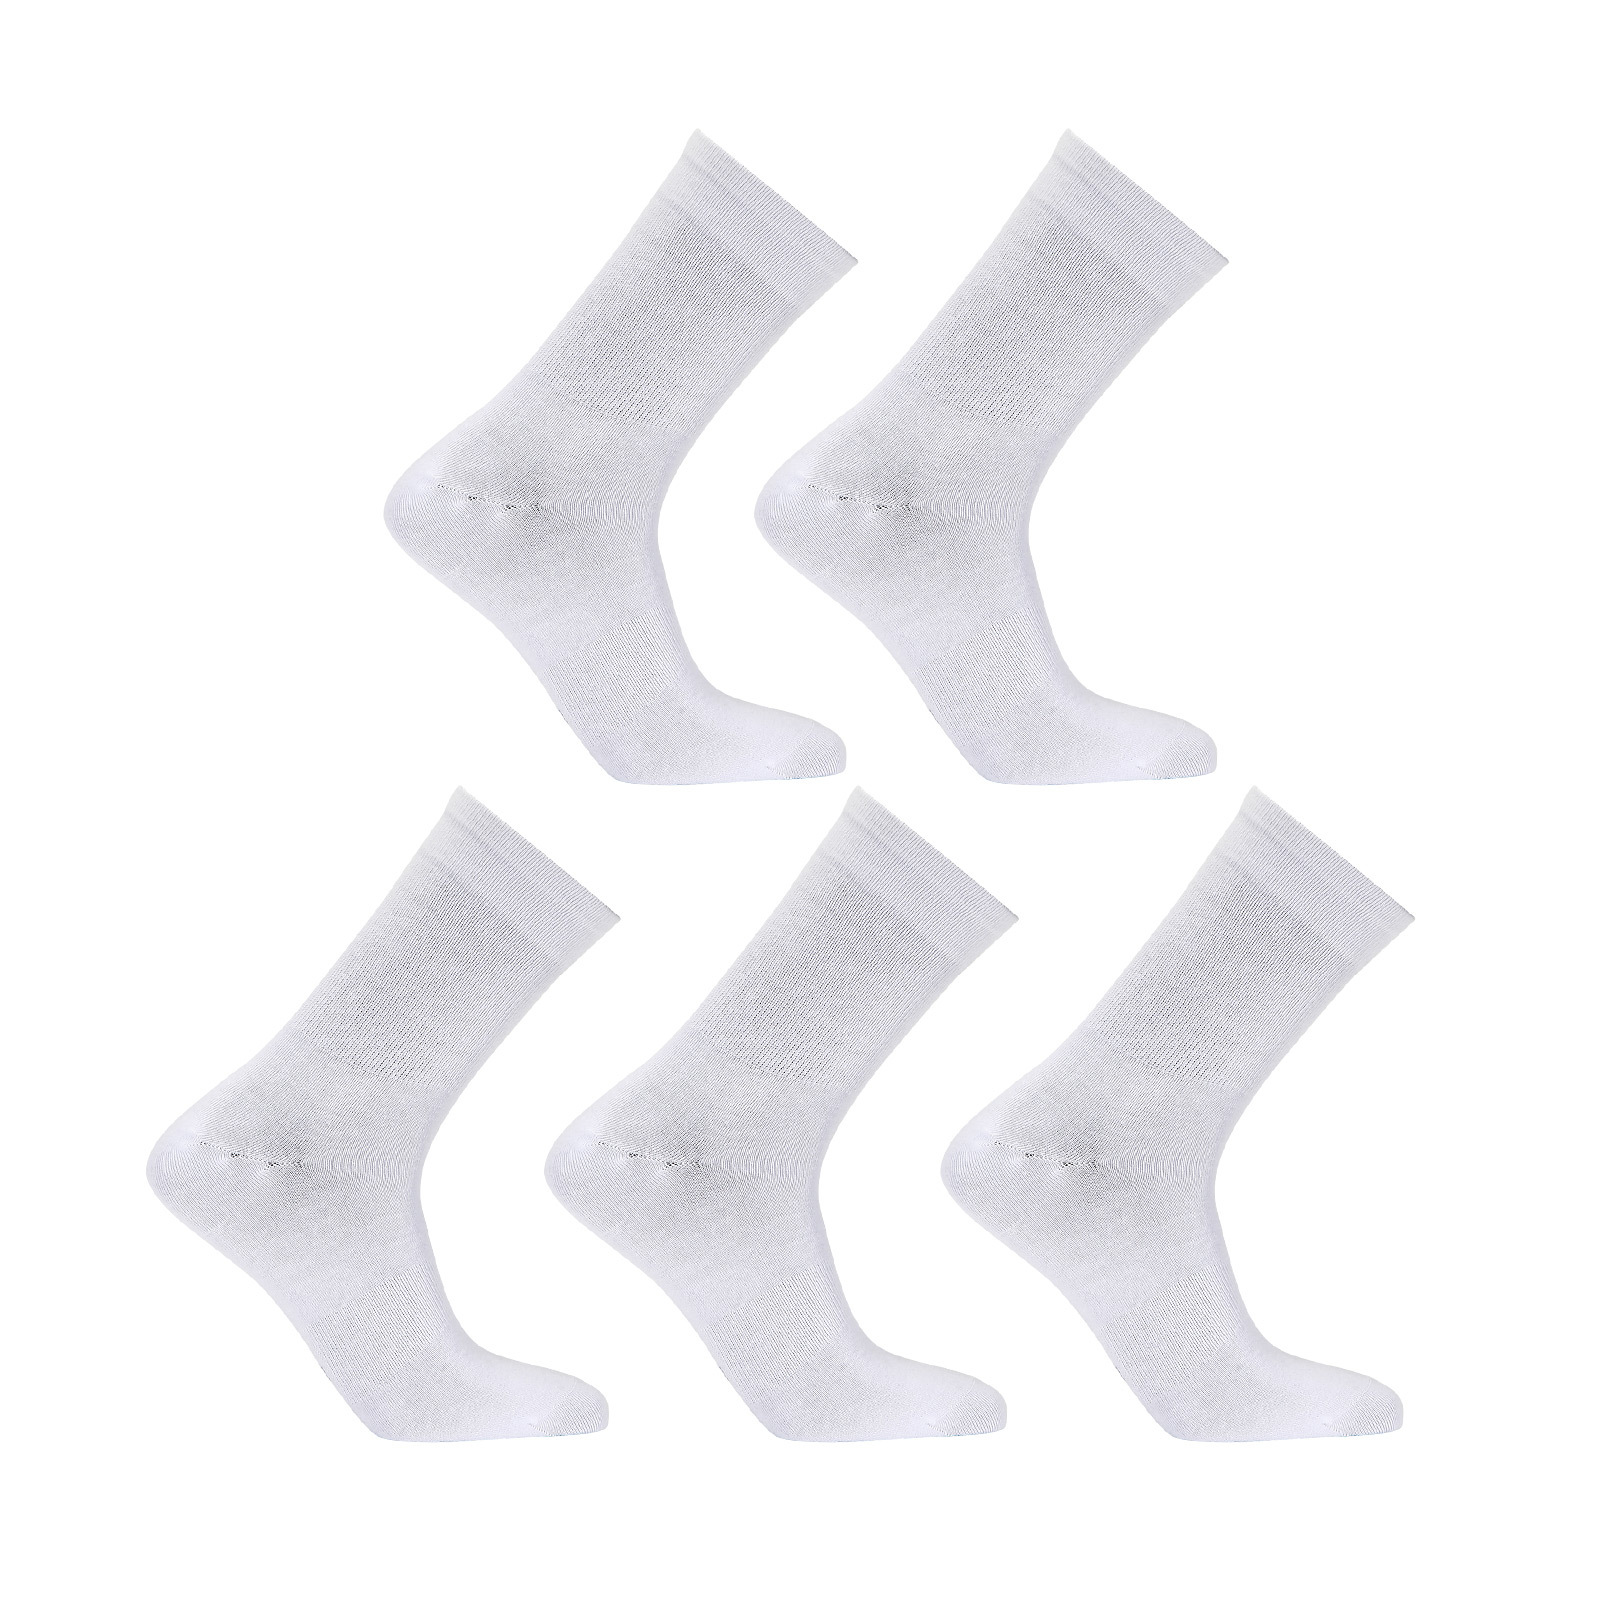 5X Small 3D Seamless Crew Socks - WHITE